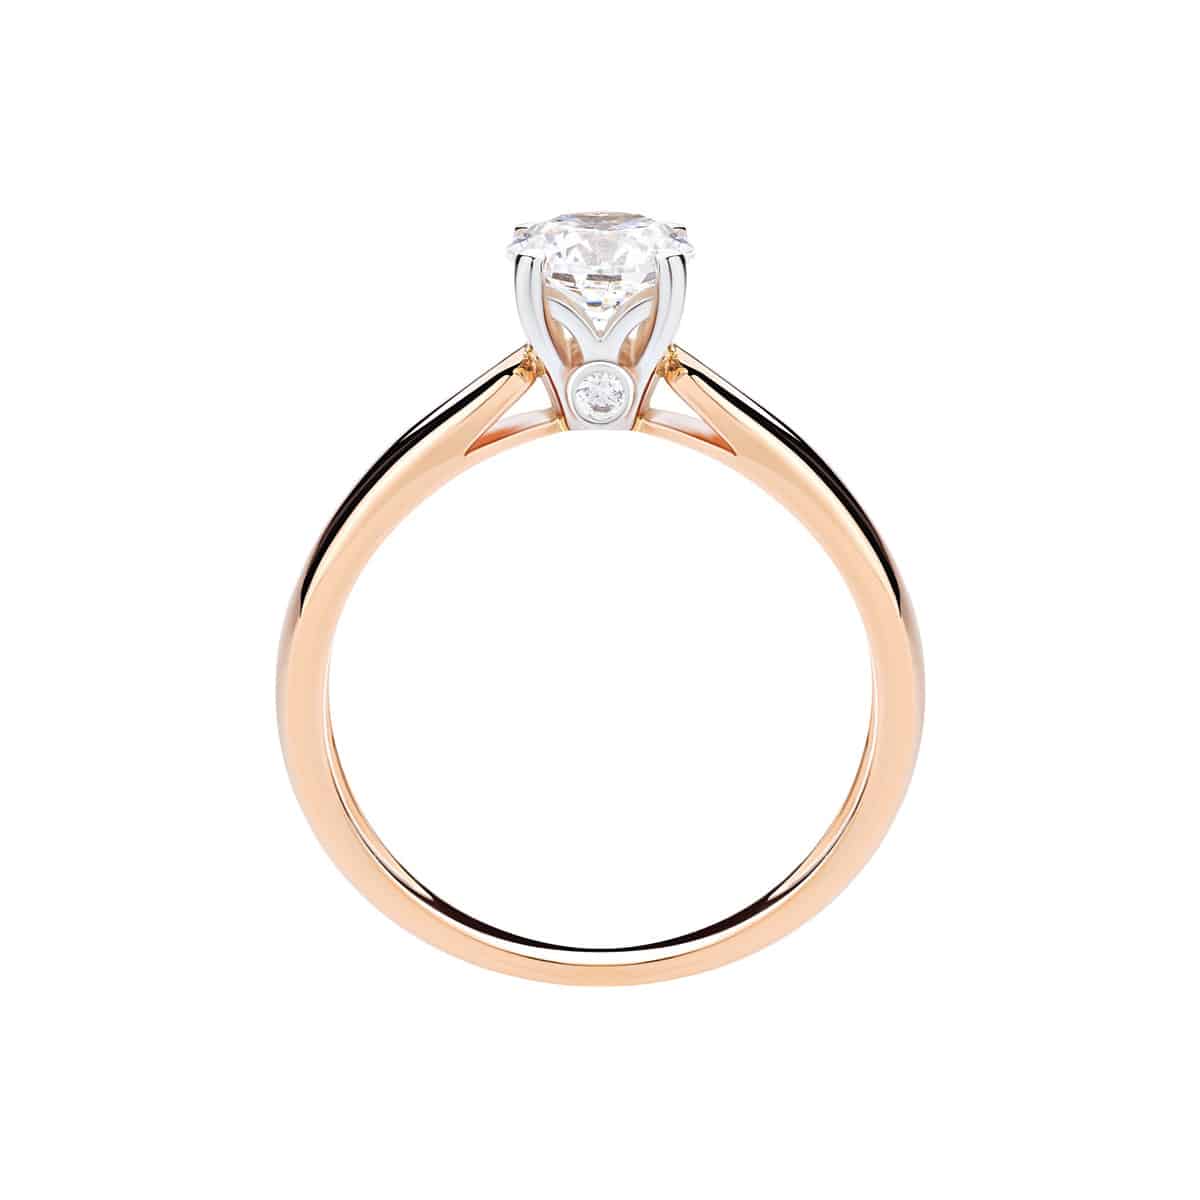 Wedding diamond ring isolated on a white background